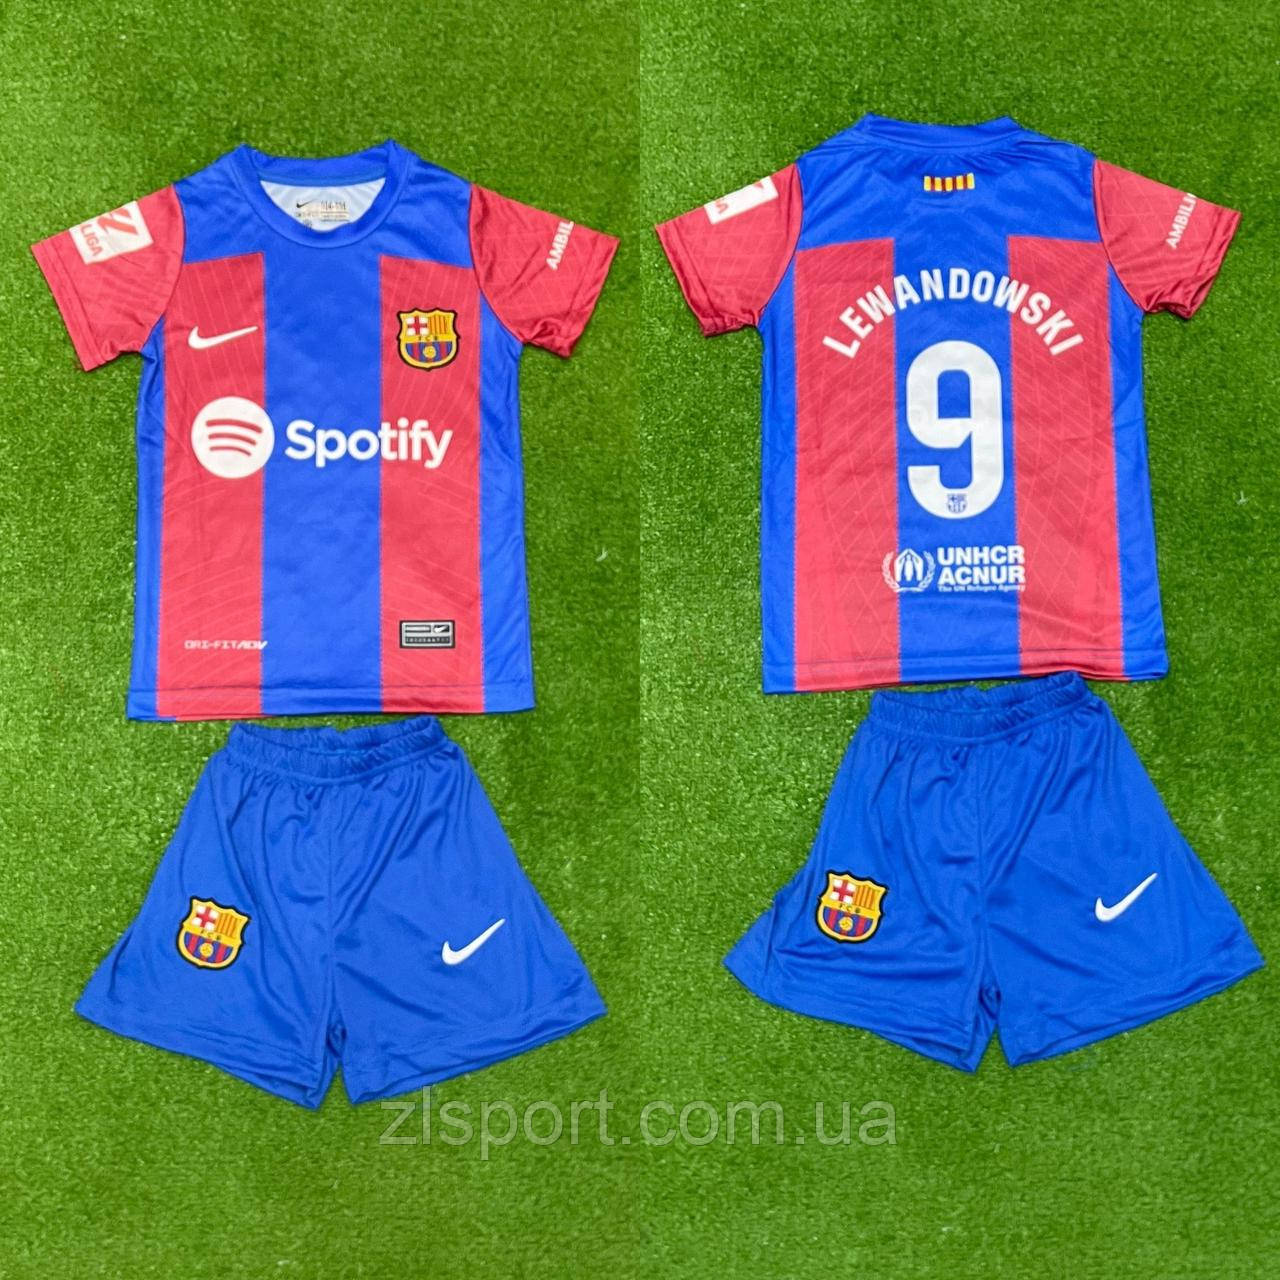 Дитяча футбольна форма Левандовскі (Barcelona) Lewandowski